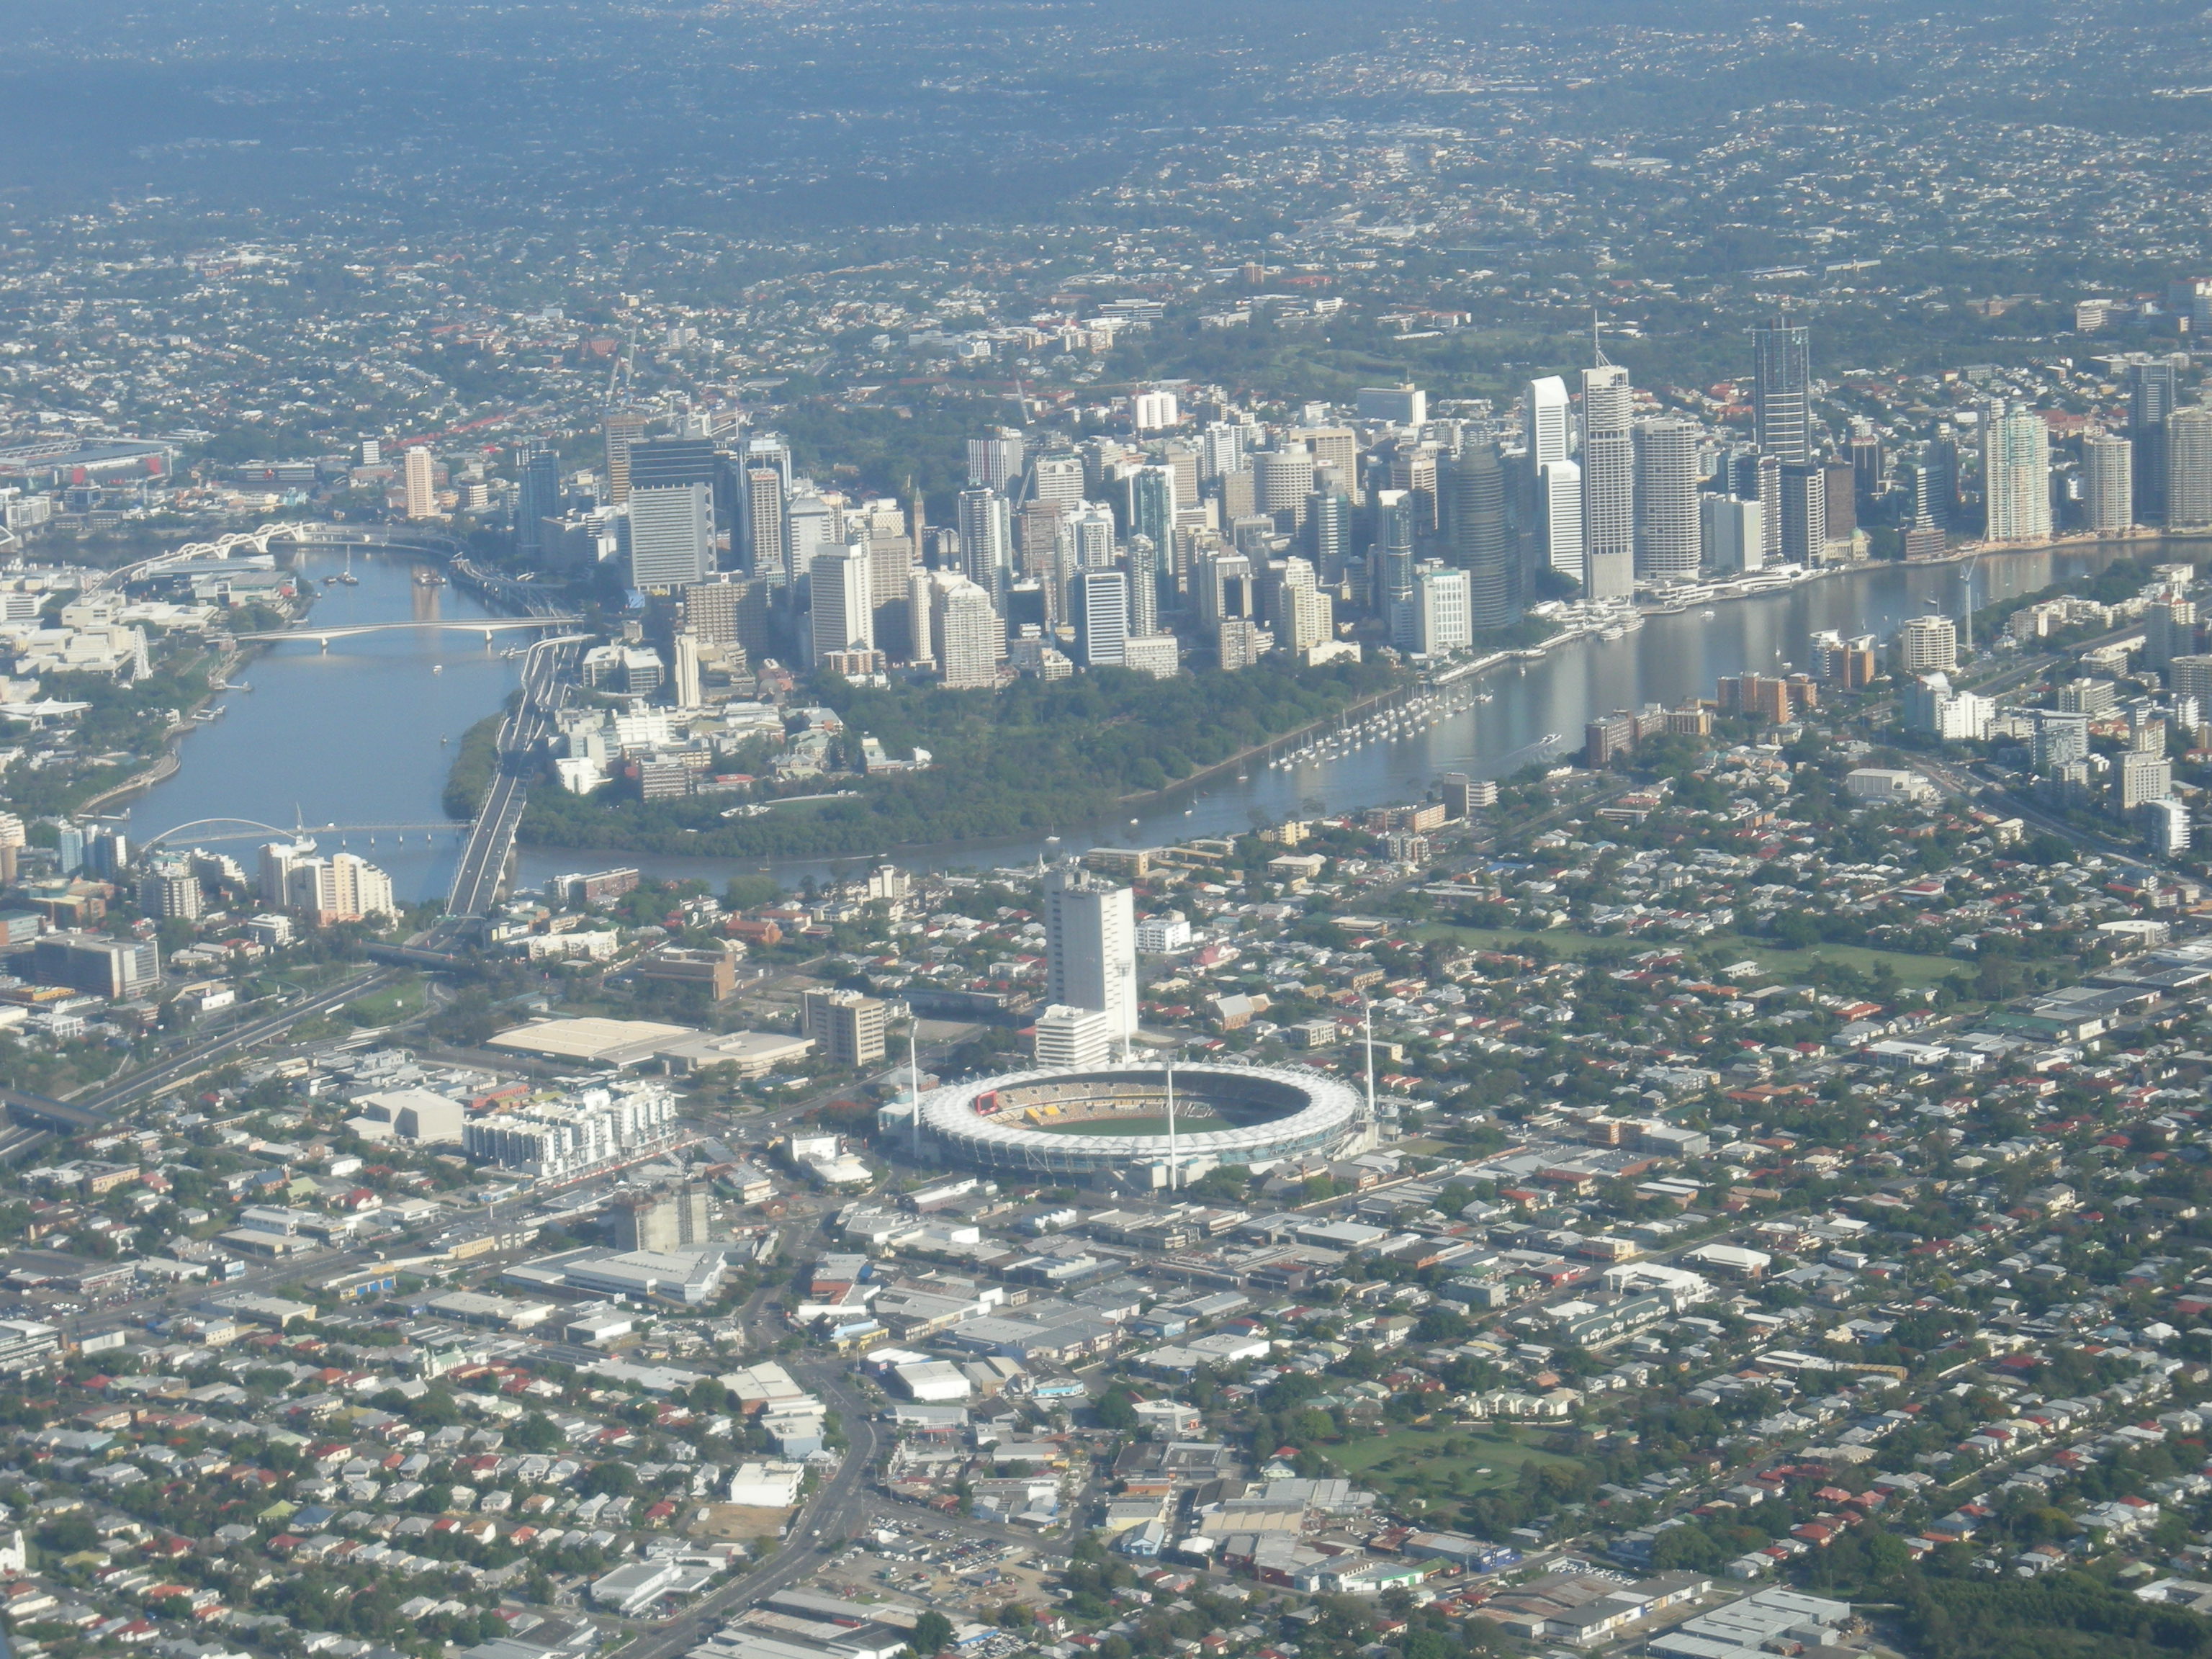  Brisbane "an ever growing city"